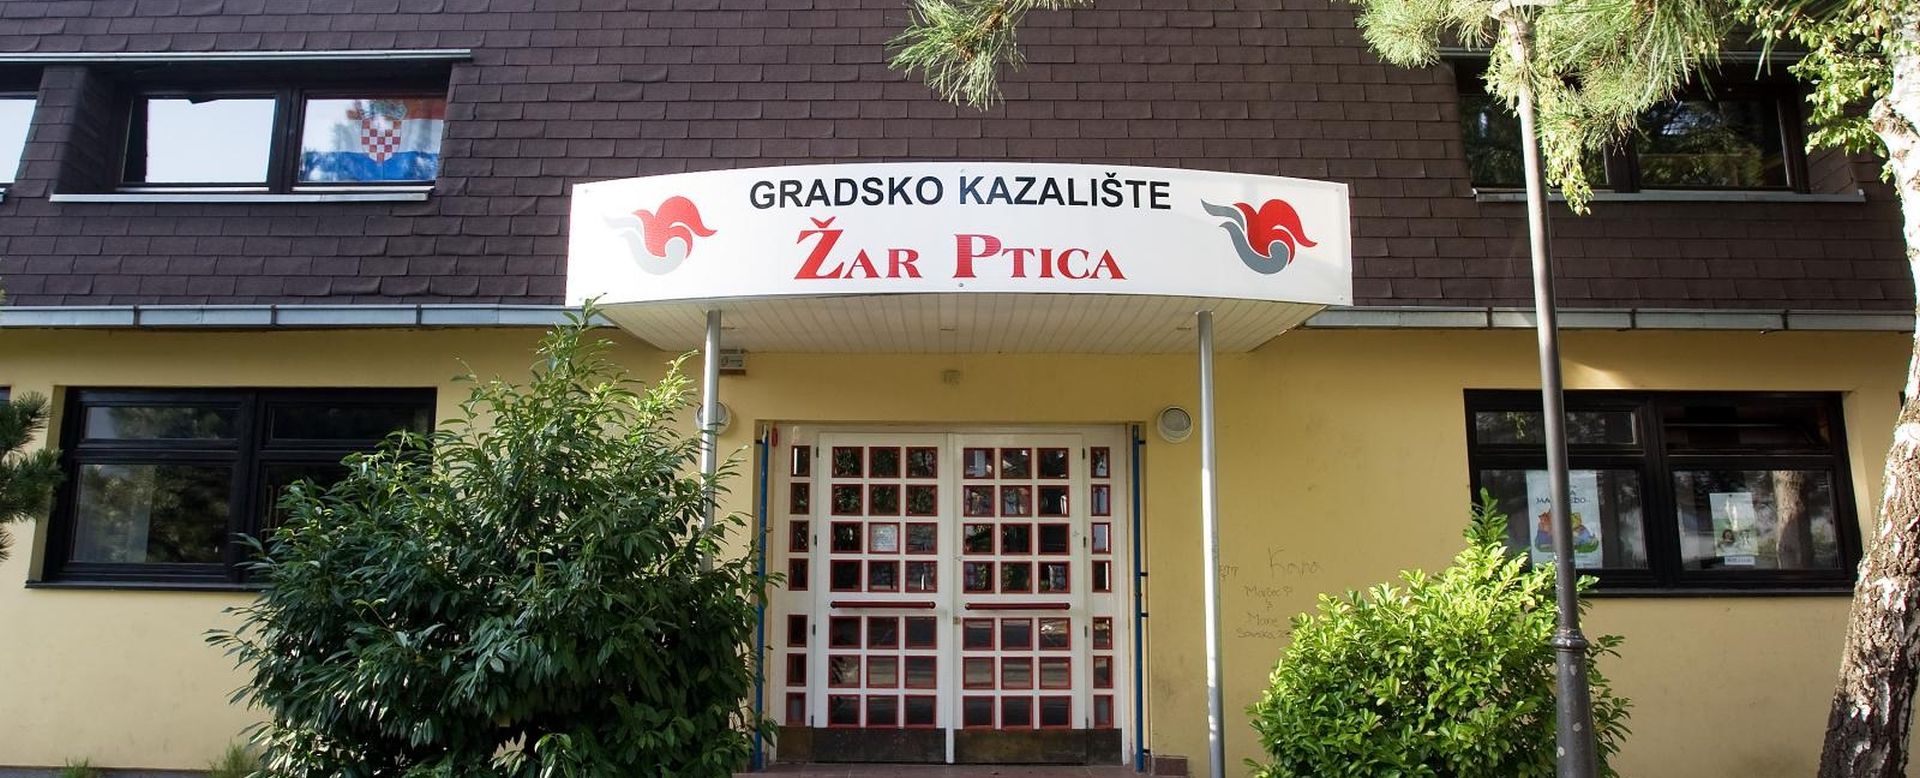 06.08.2012., Zagreb - Gradsko kazaliste "Zar ptica", Bijenicka 97.
Photo: Jurica Galoic/PIXSELL